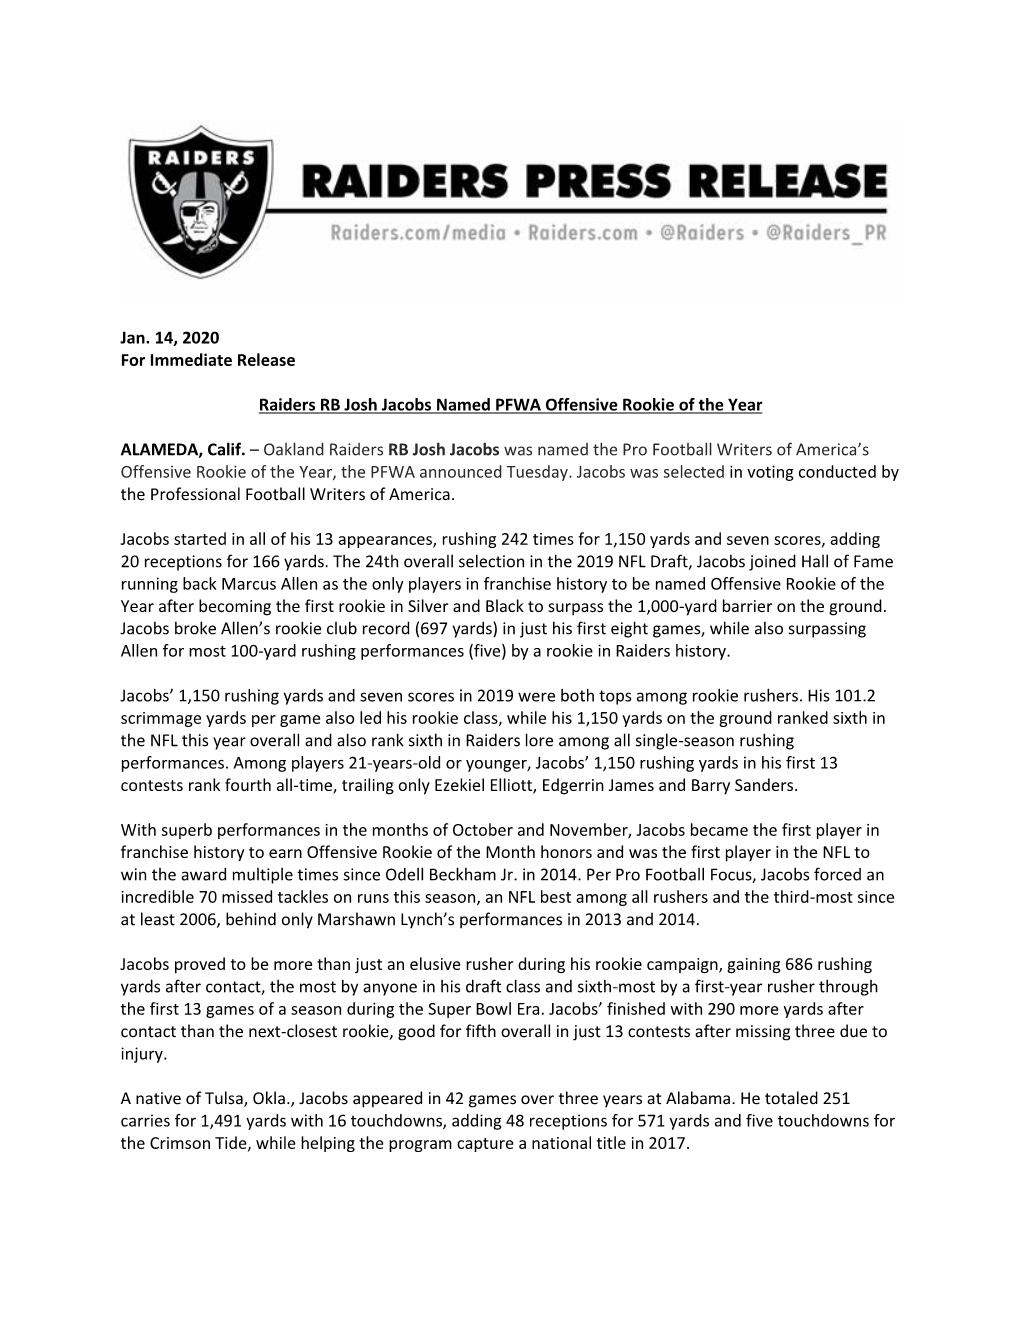 Jan. 14, 2020 for Immediate Release Raiders RB Josh Jacobs